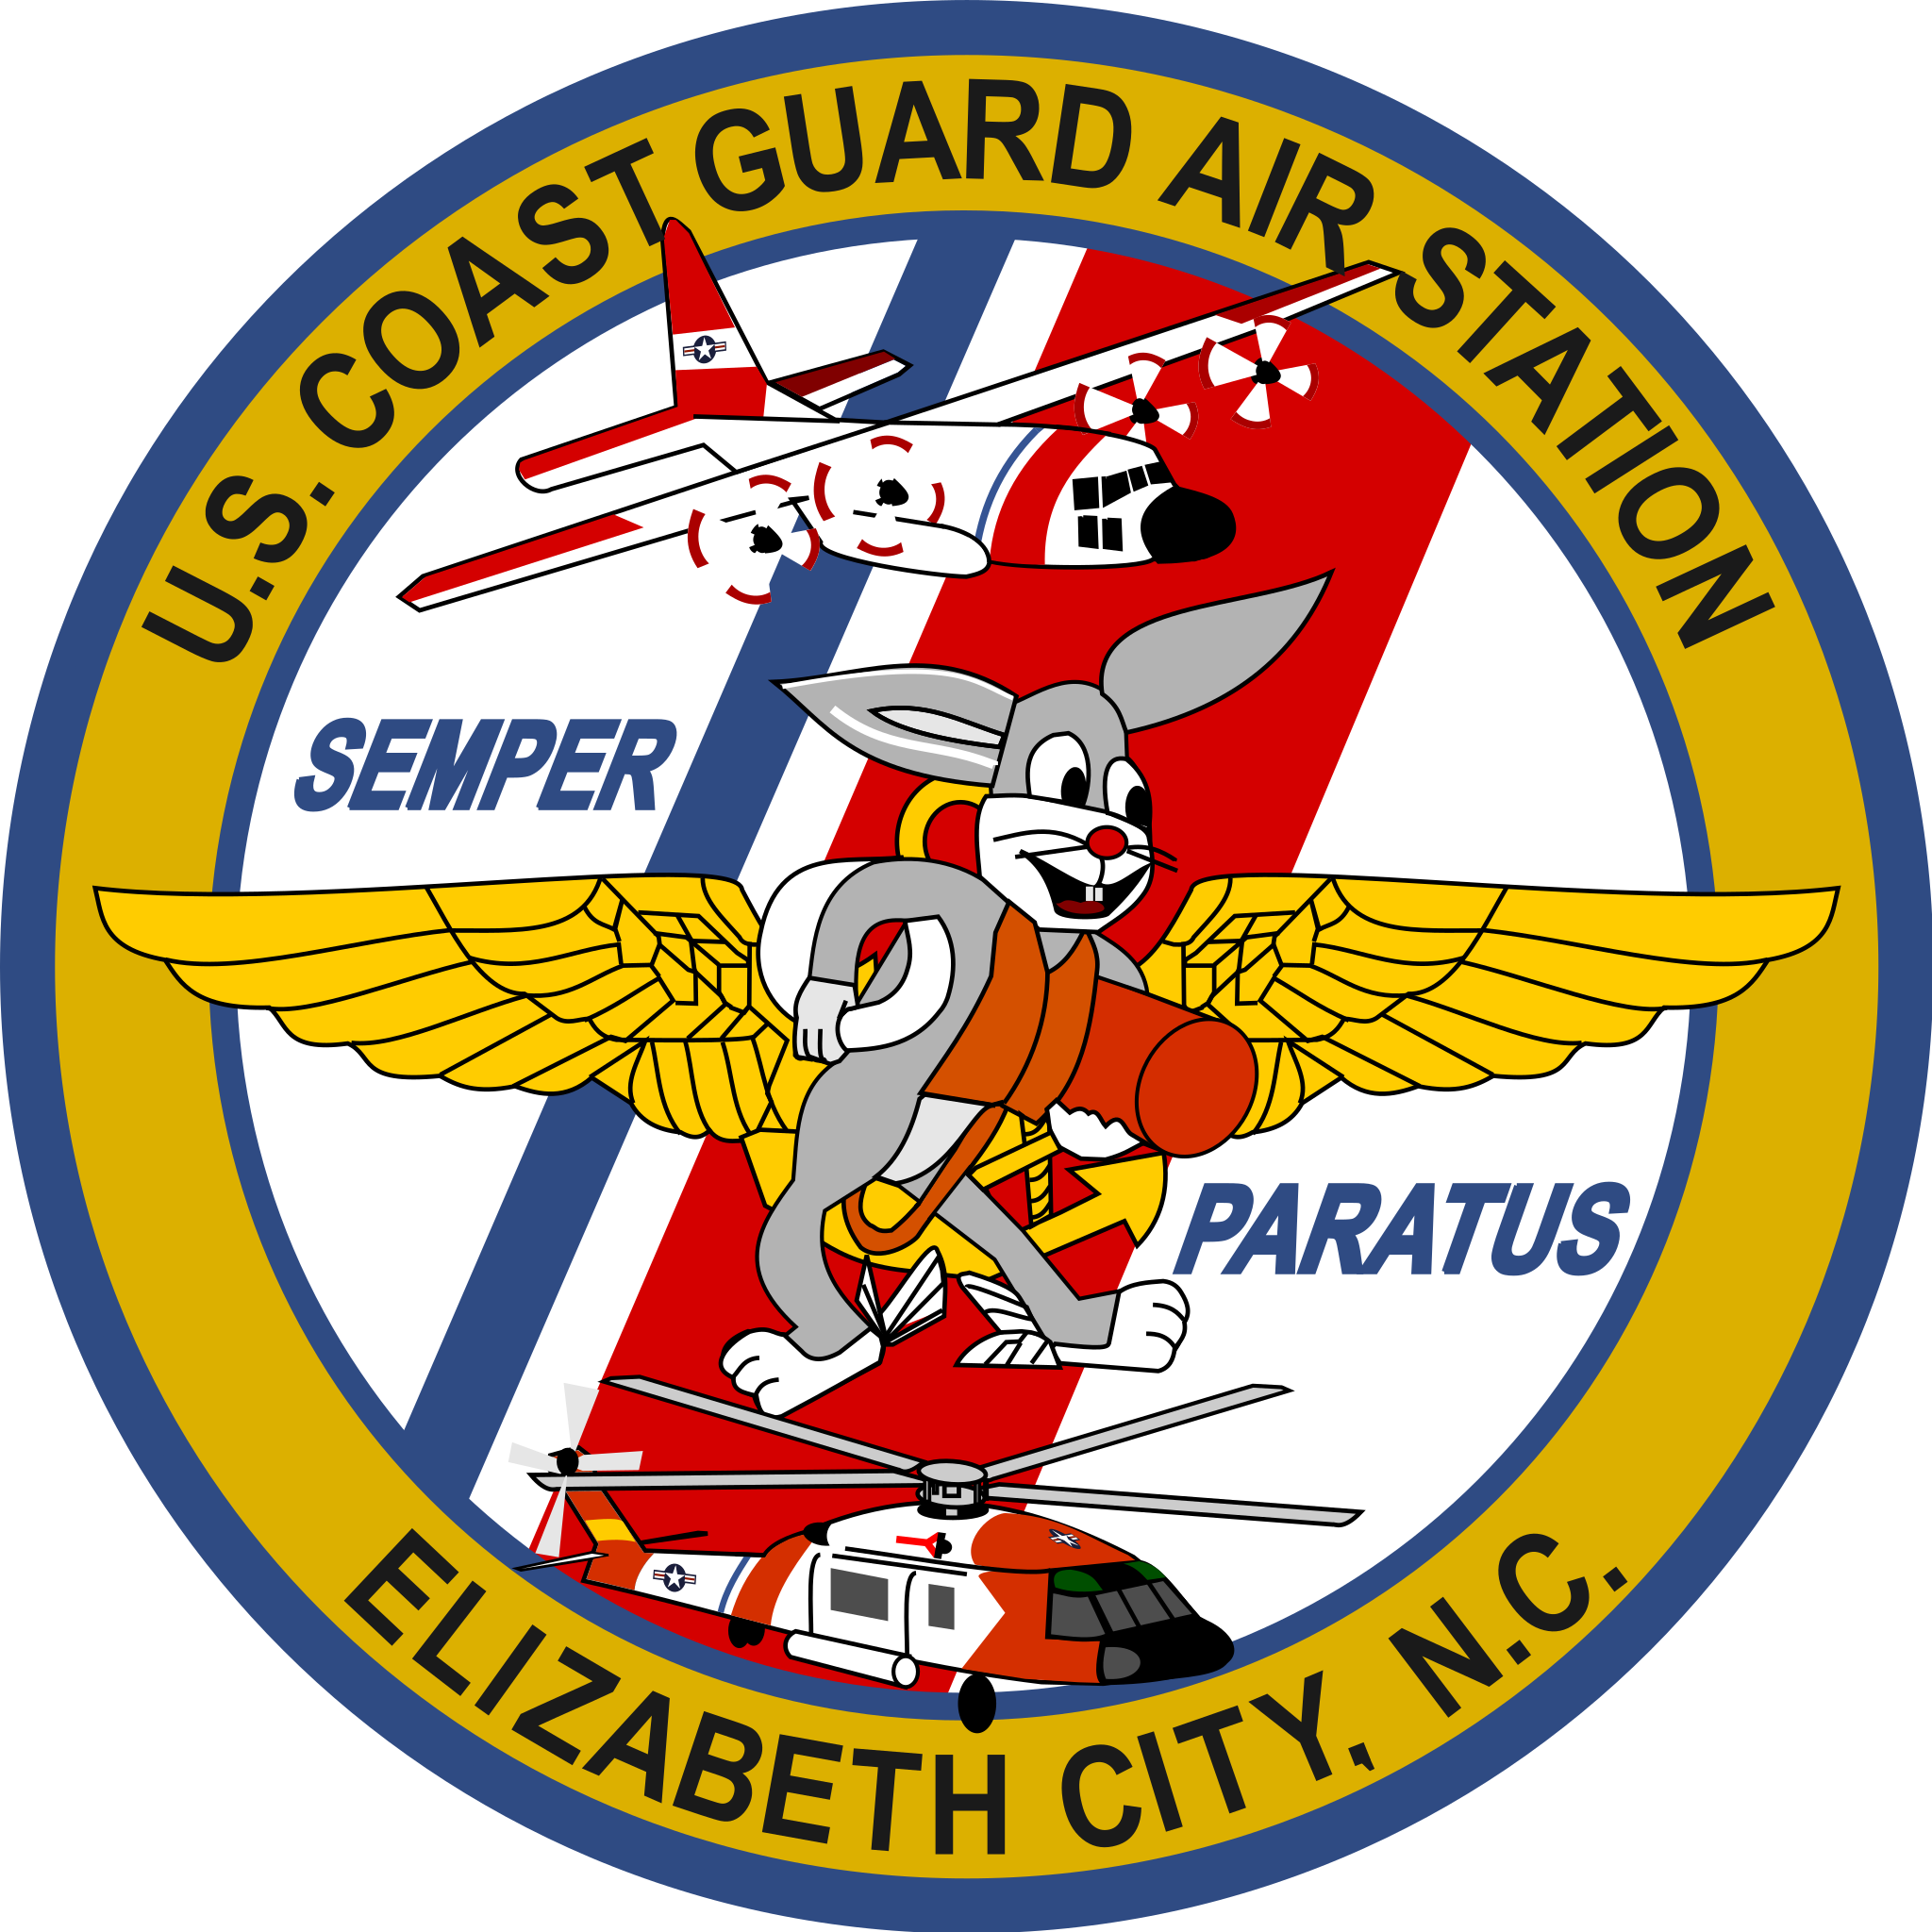 United States Coast Guard MH-60R Elizabeth City